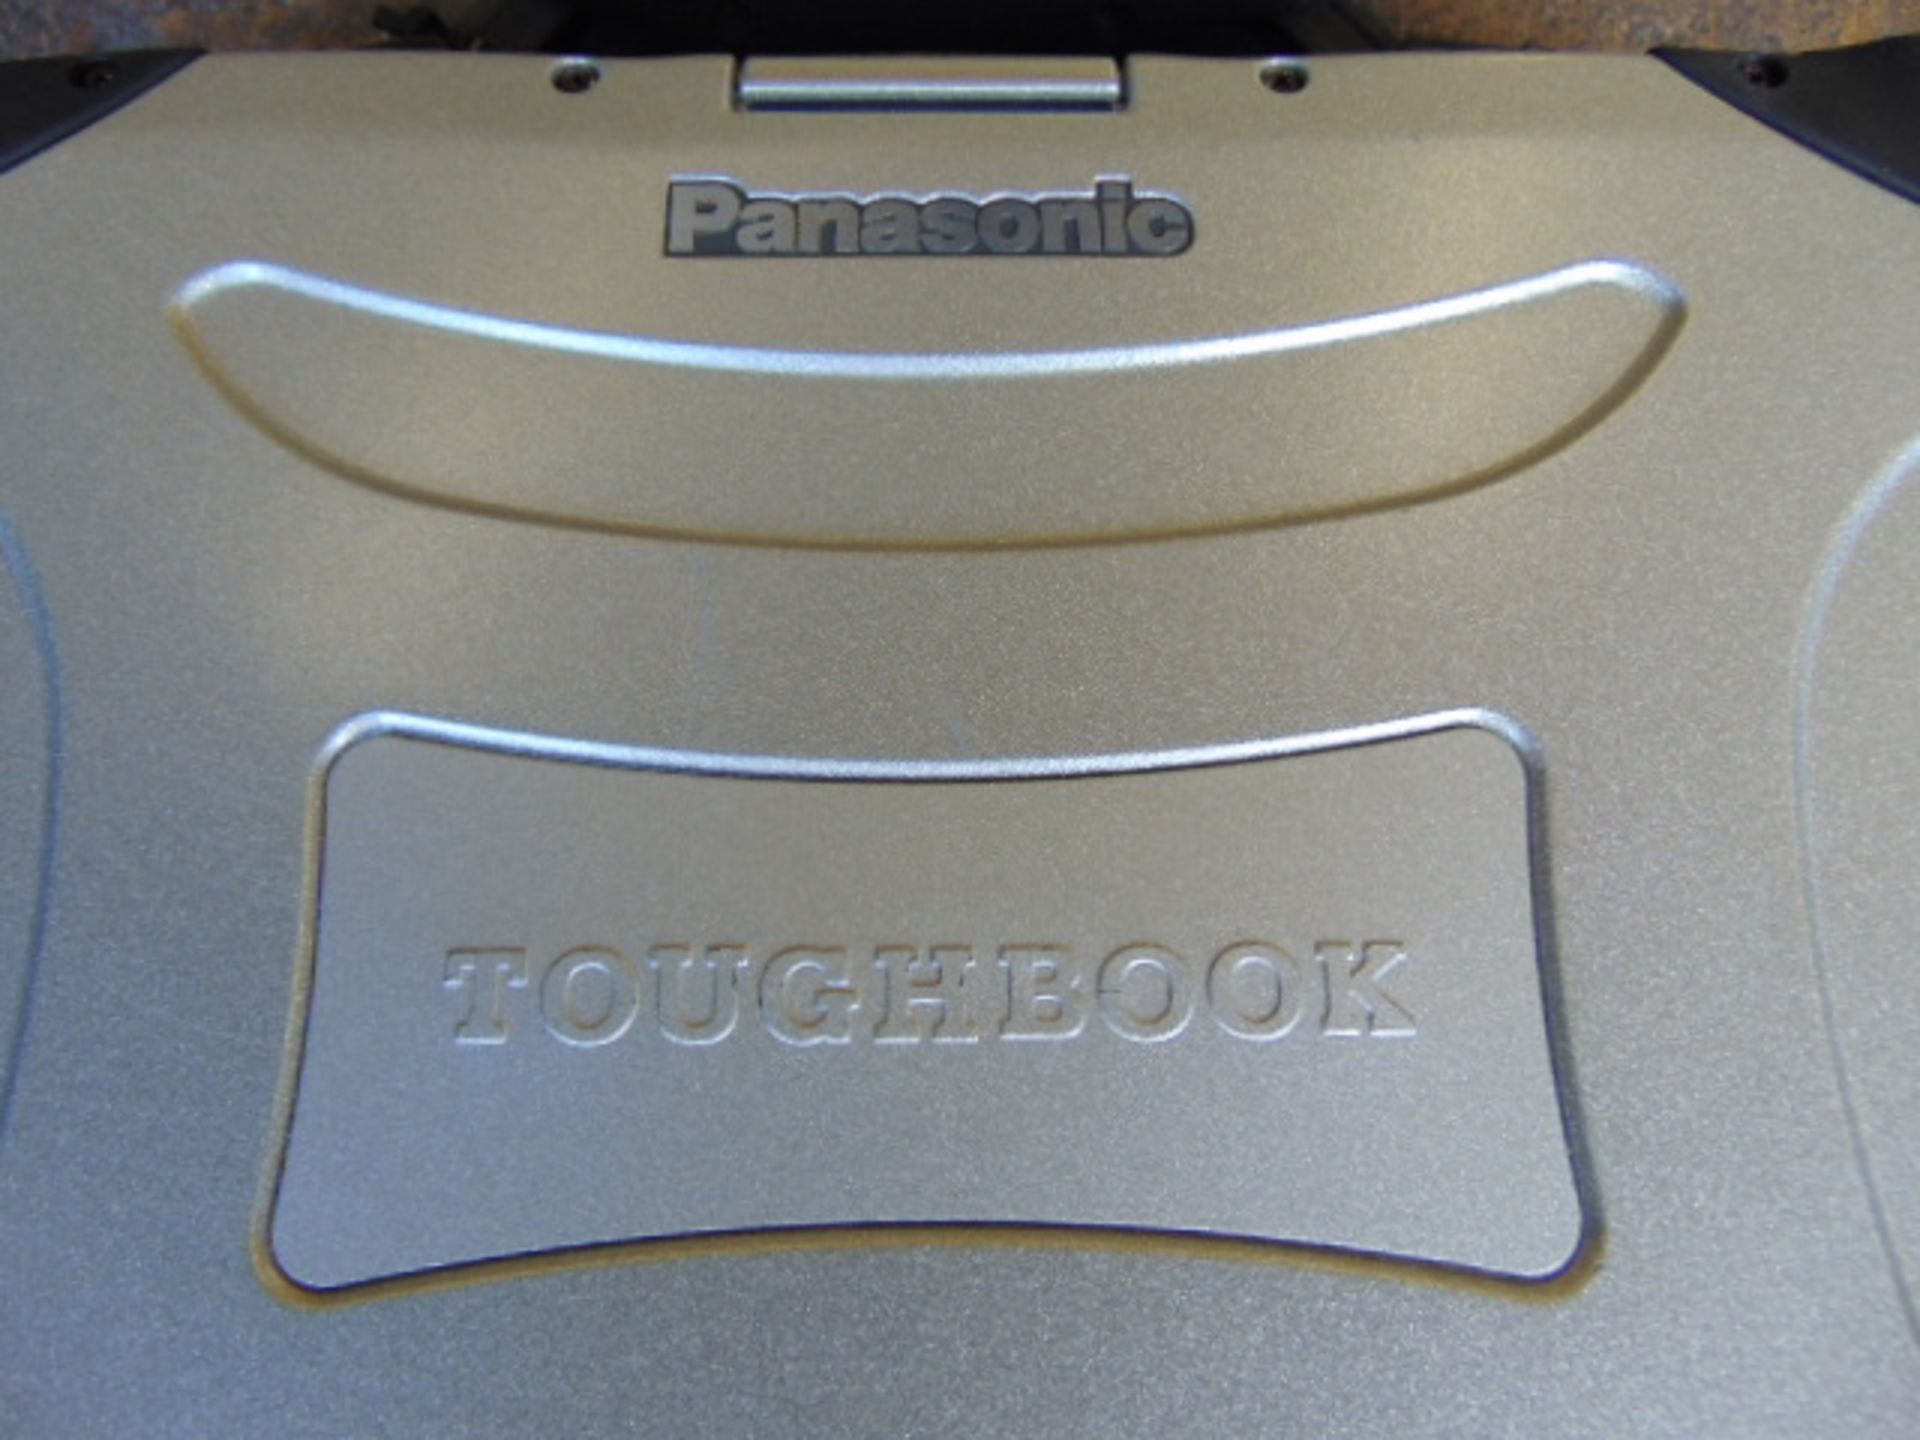 Panasonic CF-28 Toughbook Laptop - Image 5 of 12